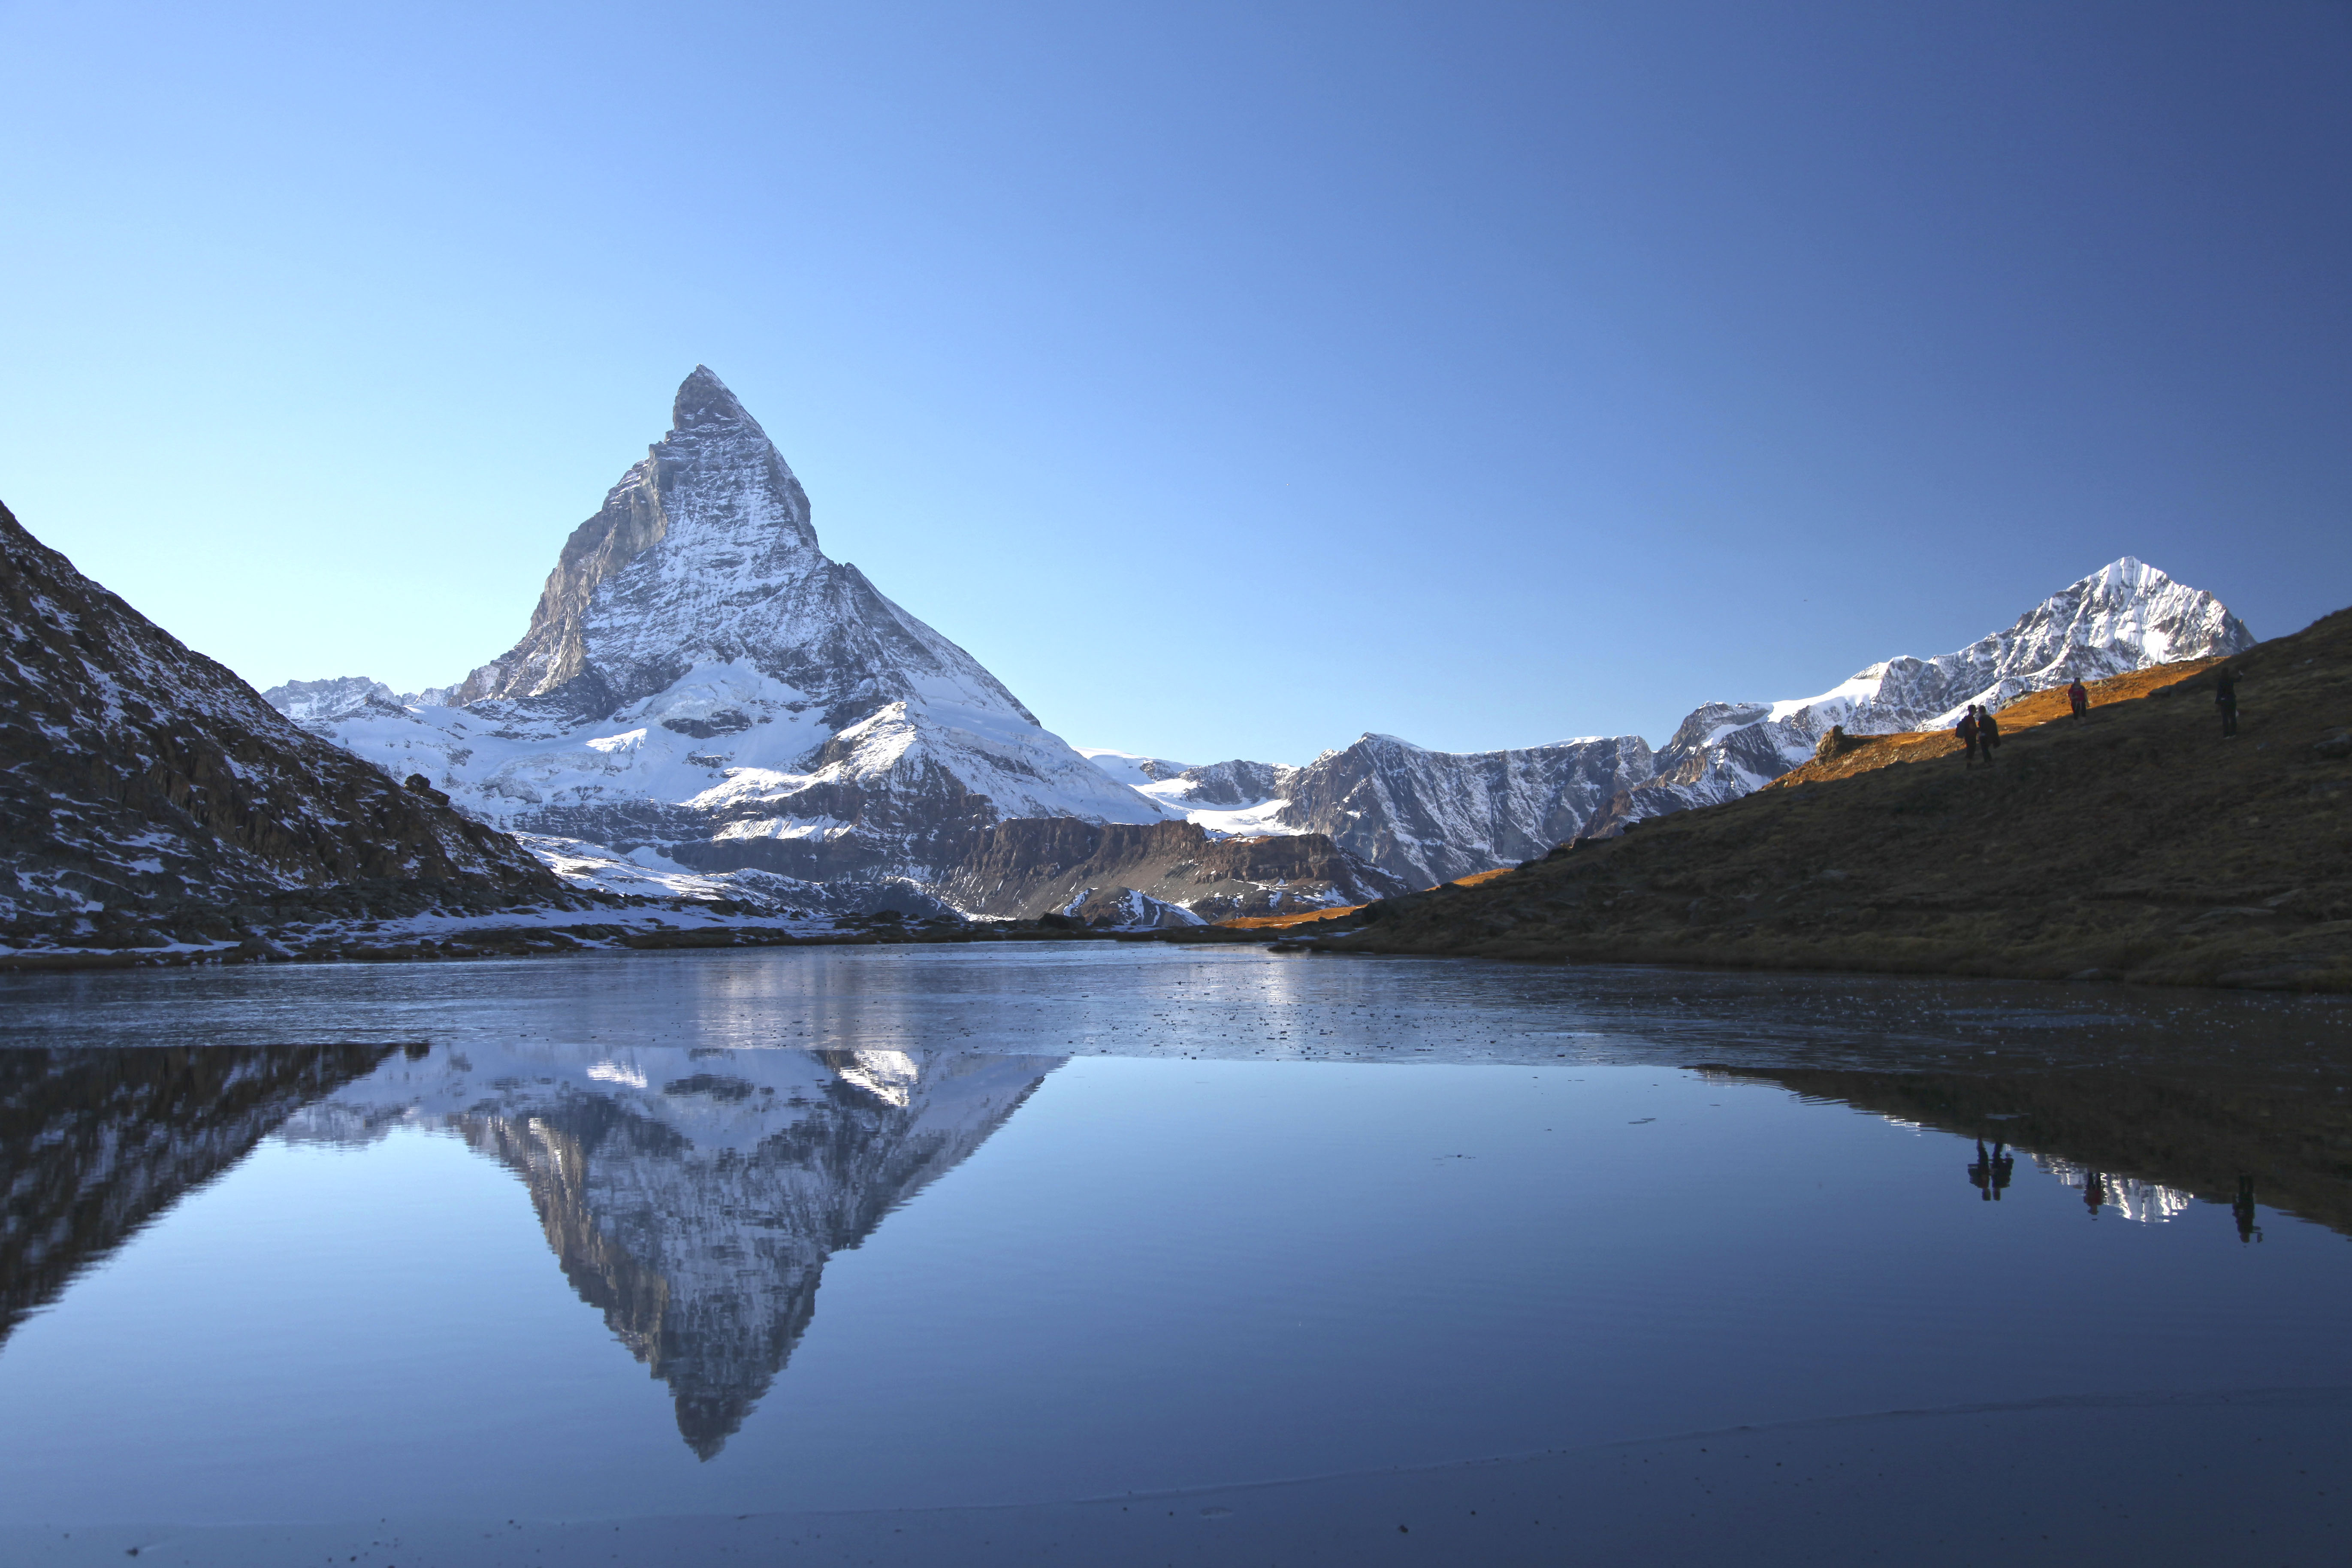 General 5483x3655 mountains water clear sky peaceful snow landscape Matterhorn nature outdoors reflection